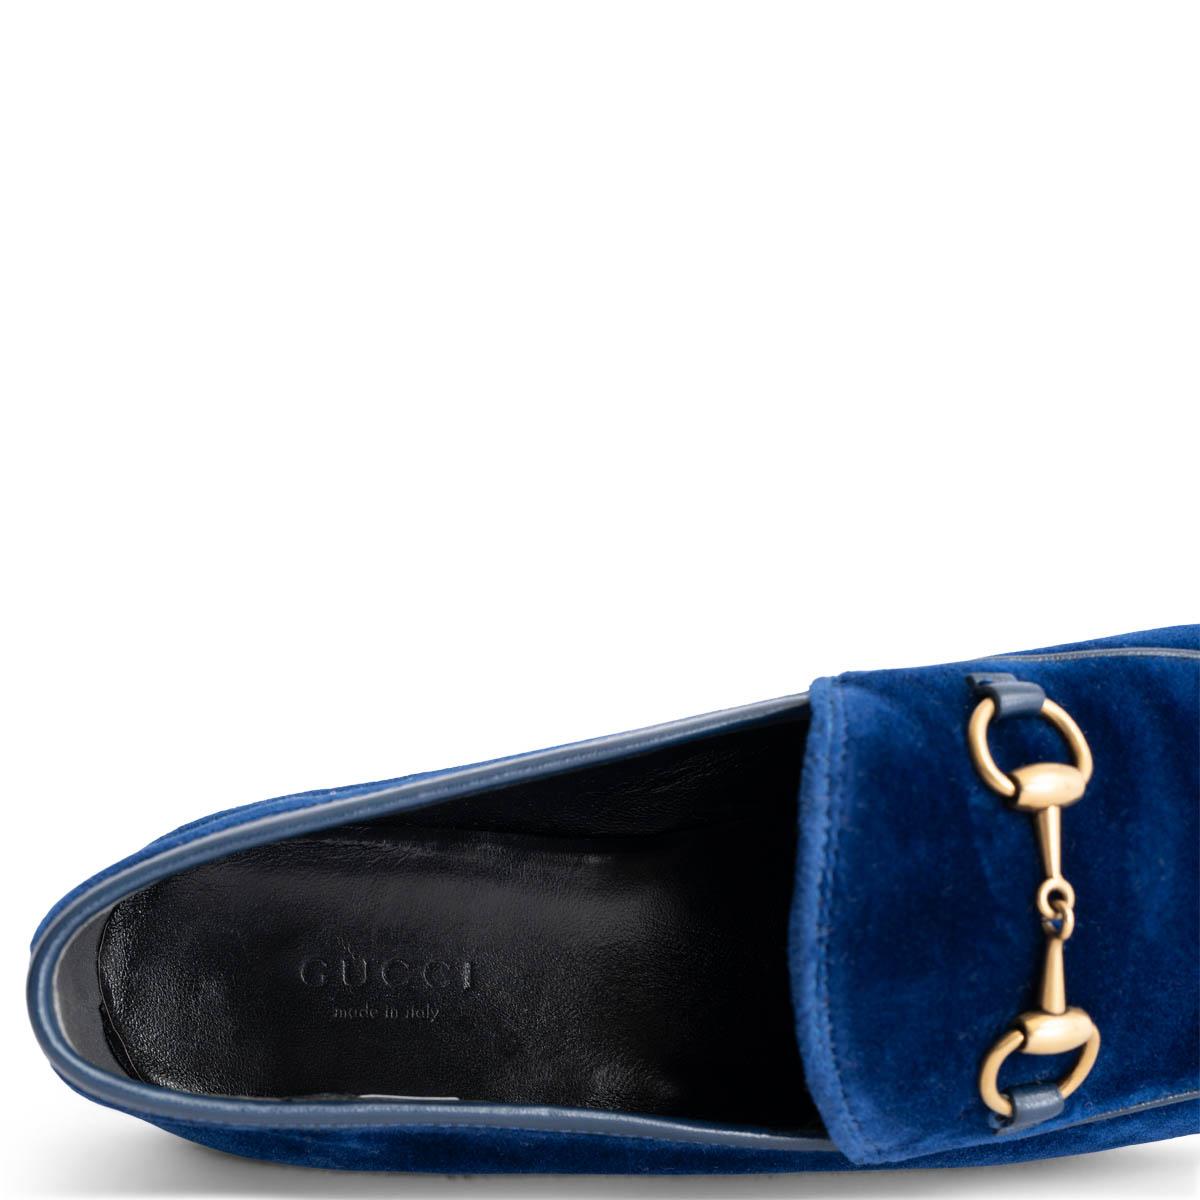 GUCCI royal blue velvet JORDANN HORSEBIT Loafers Flats Shoes 37.5 1